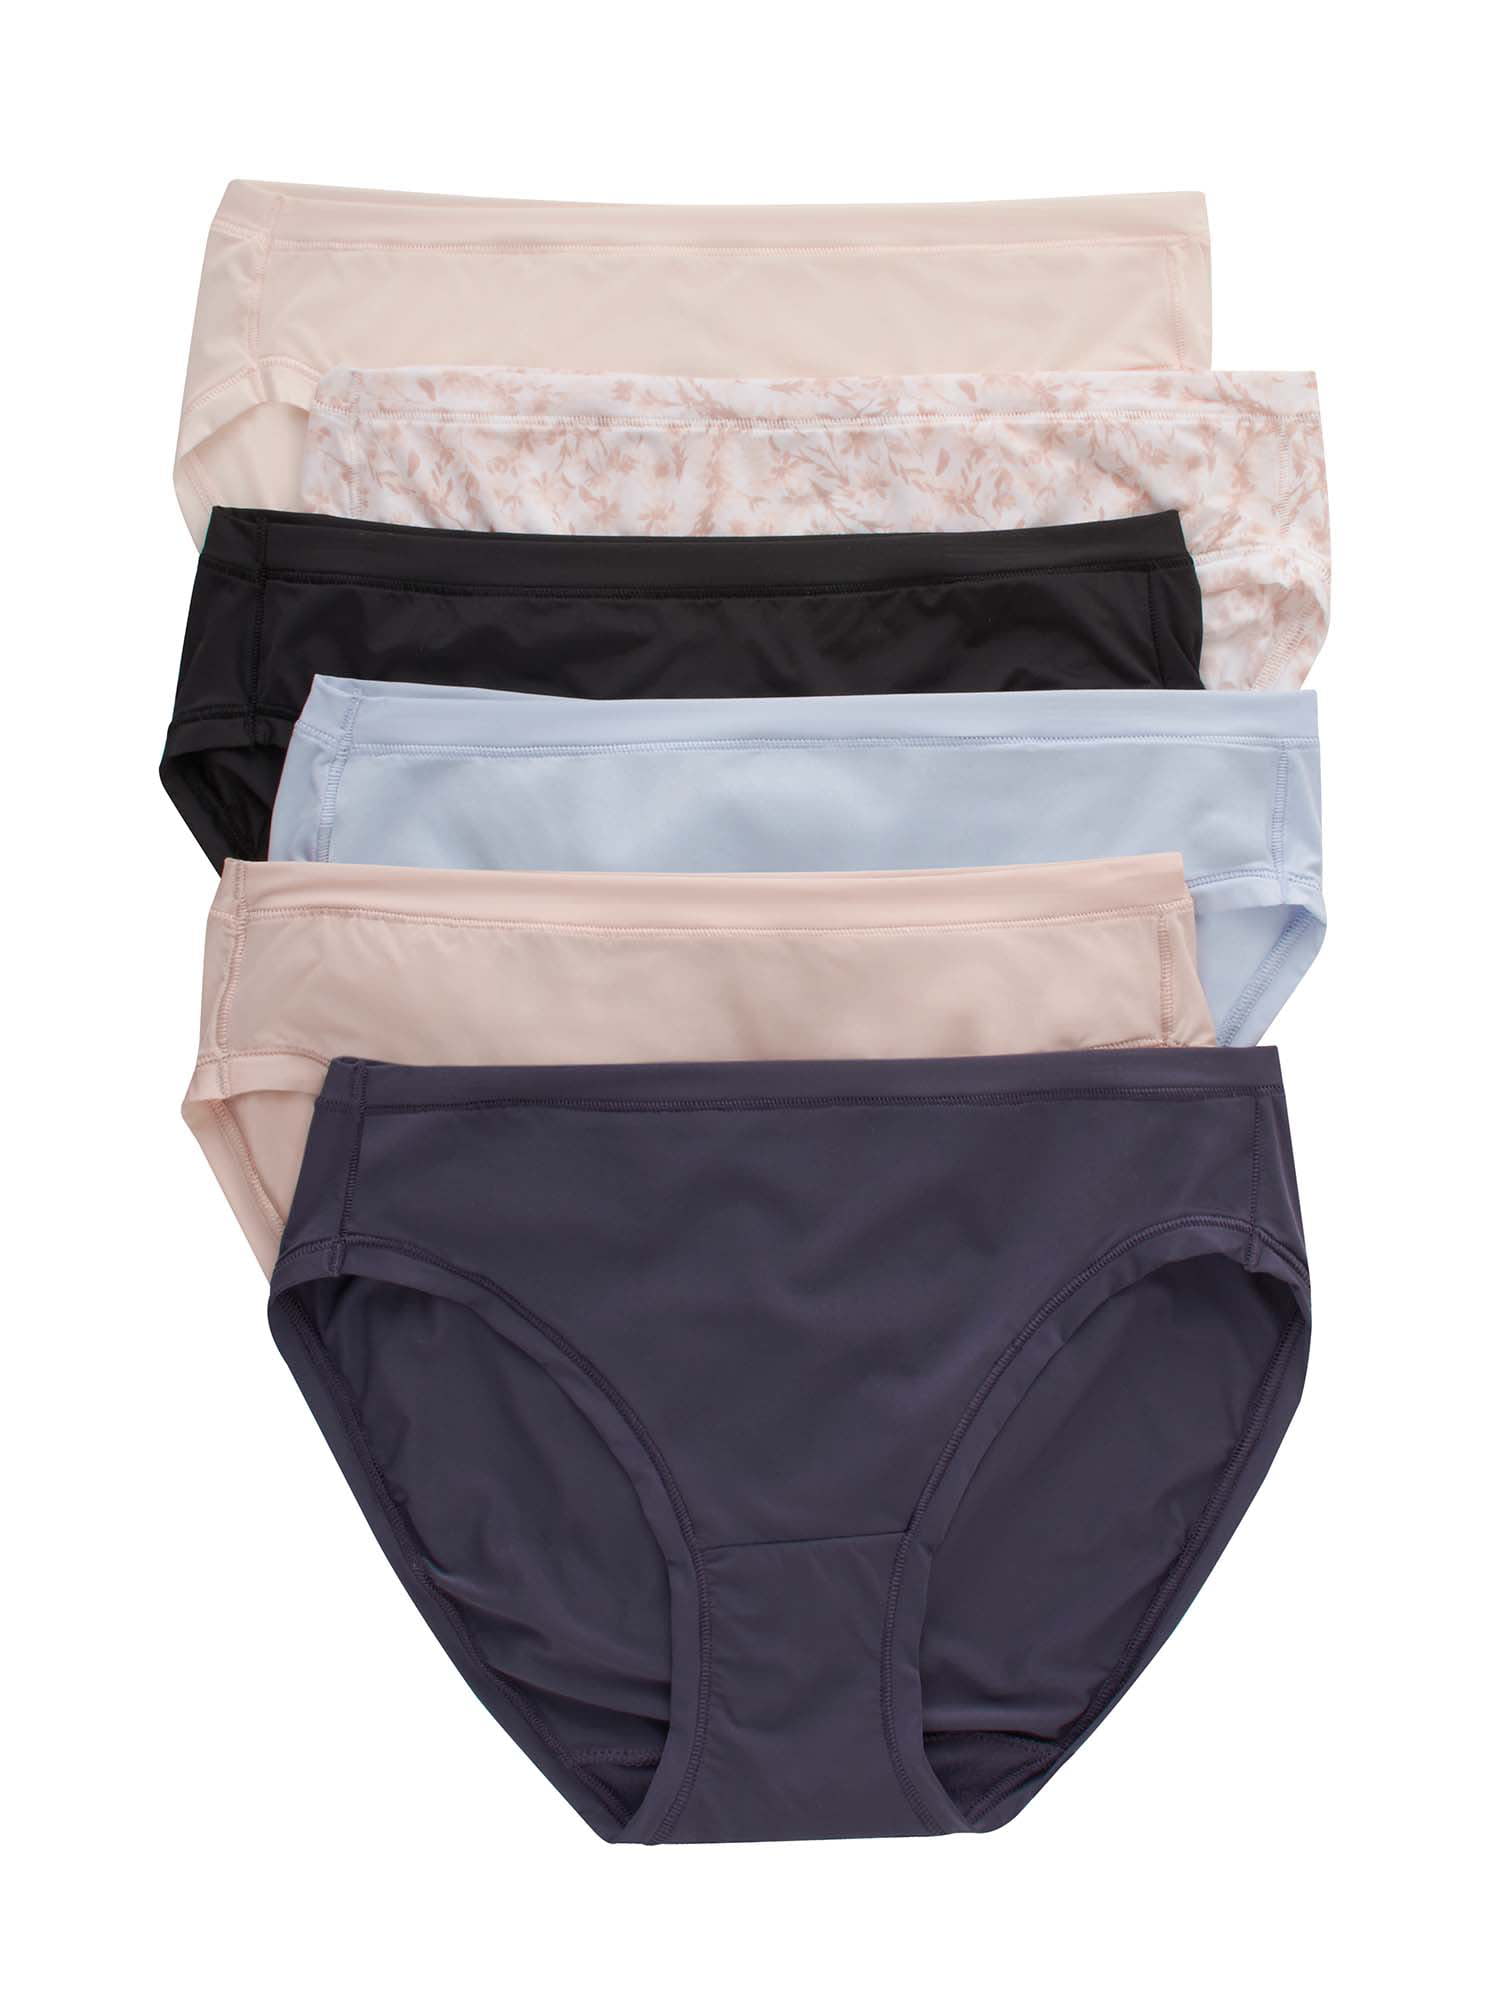 Joyspun Women's Cotton Bikini Panties, 6-Pack, Sizes S to 2XL 